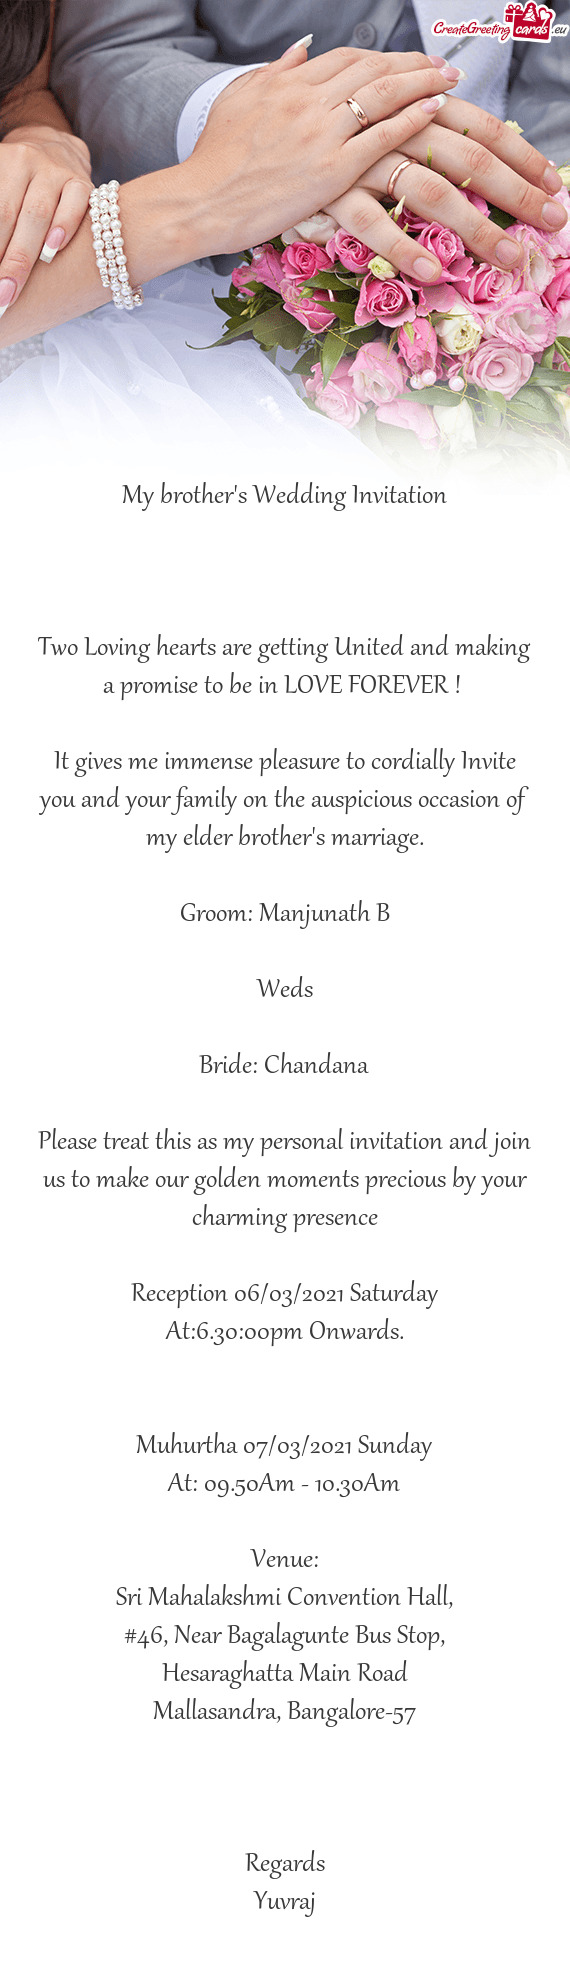 Bride: Chandana